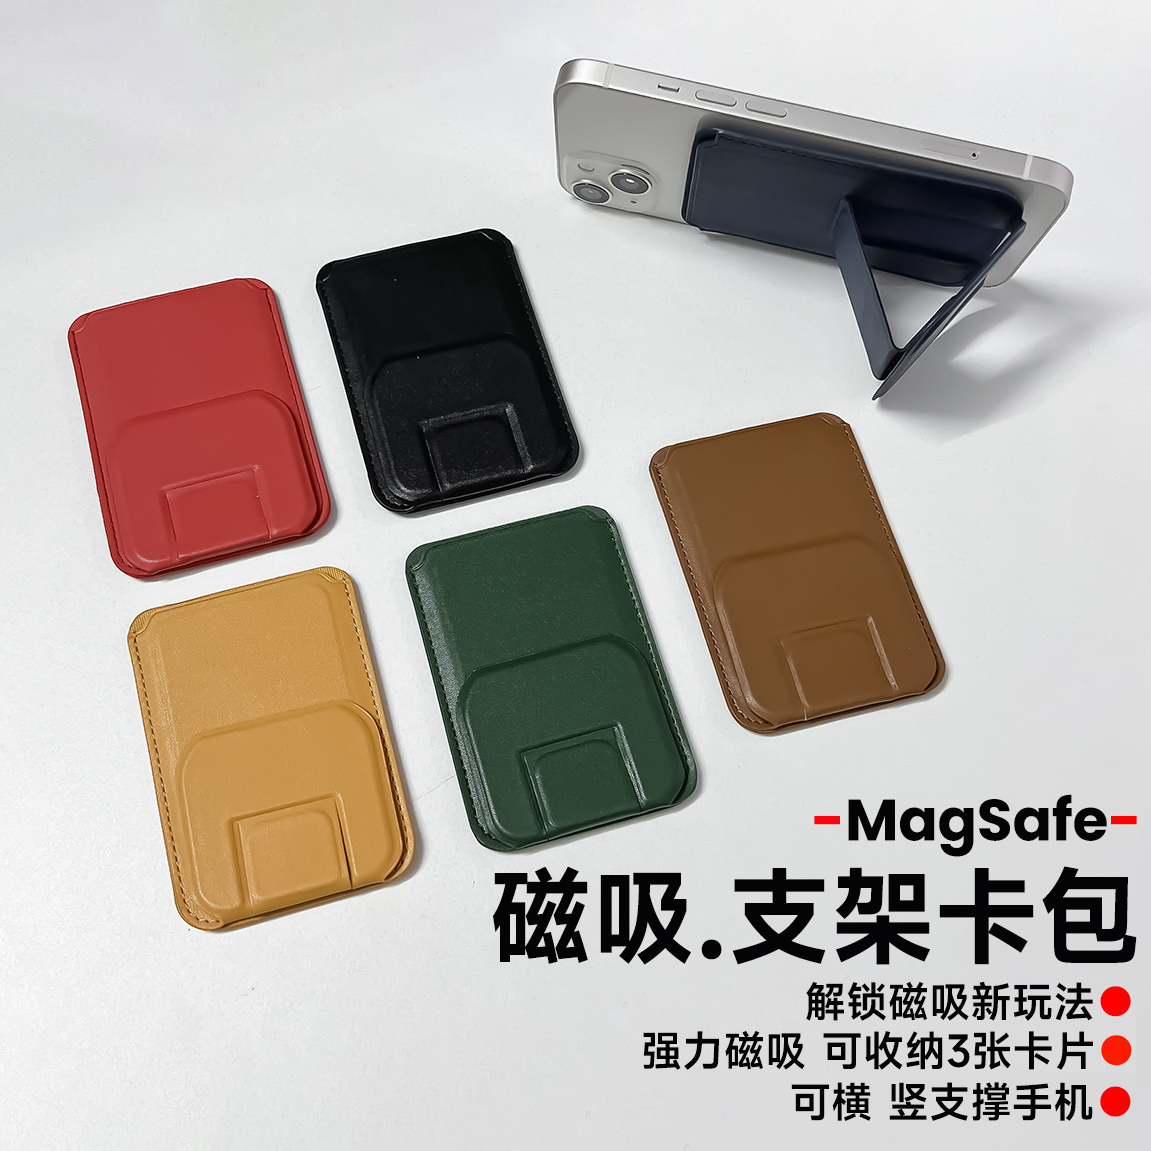 magsafe磁吸式卡包手机支架适